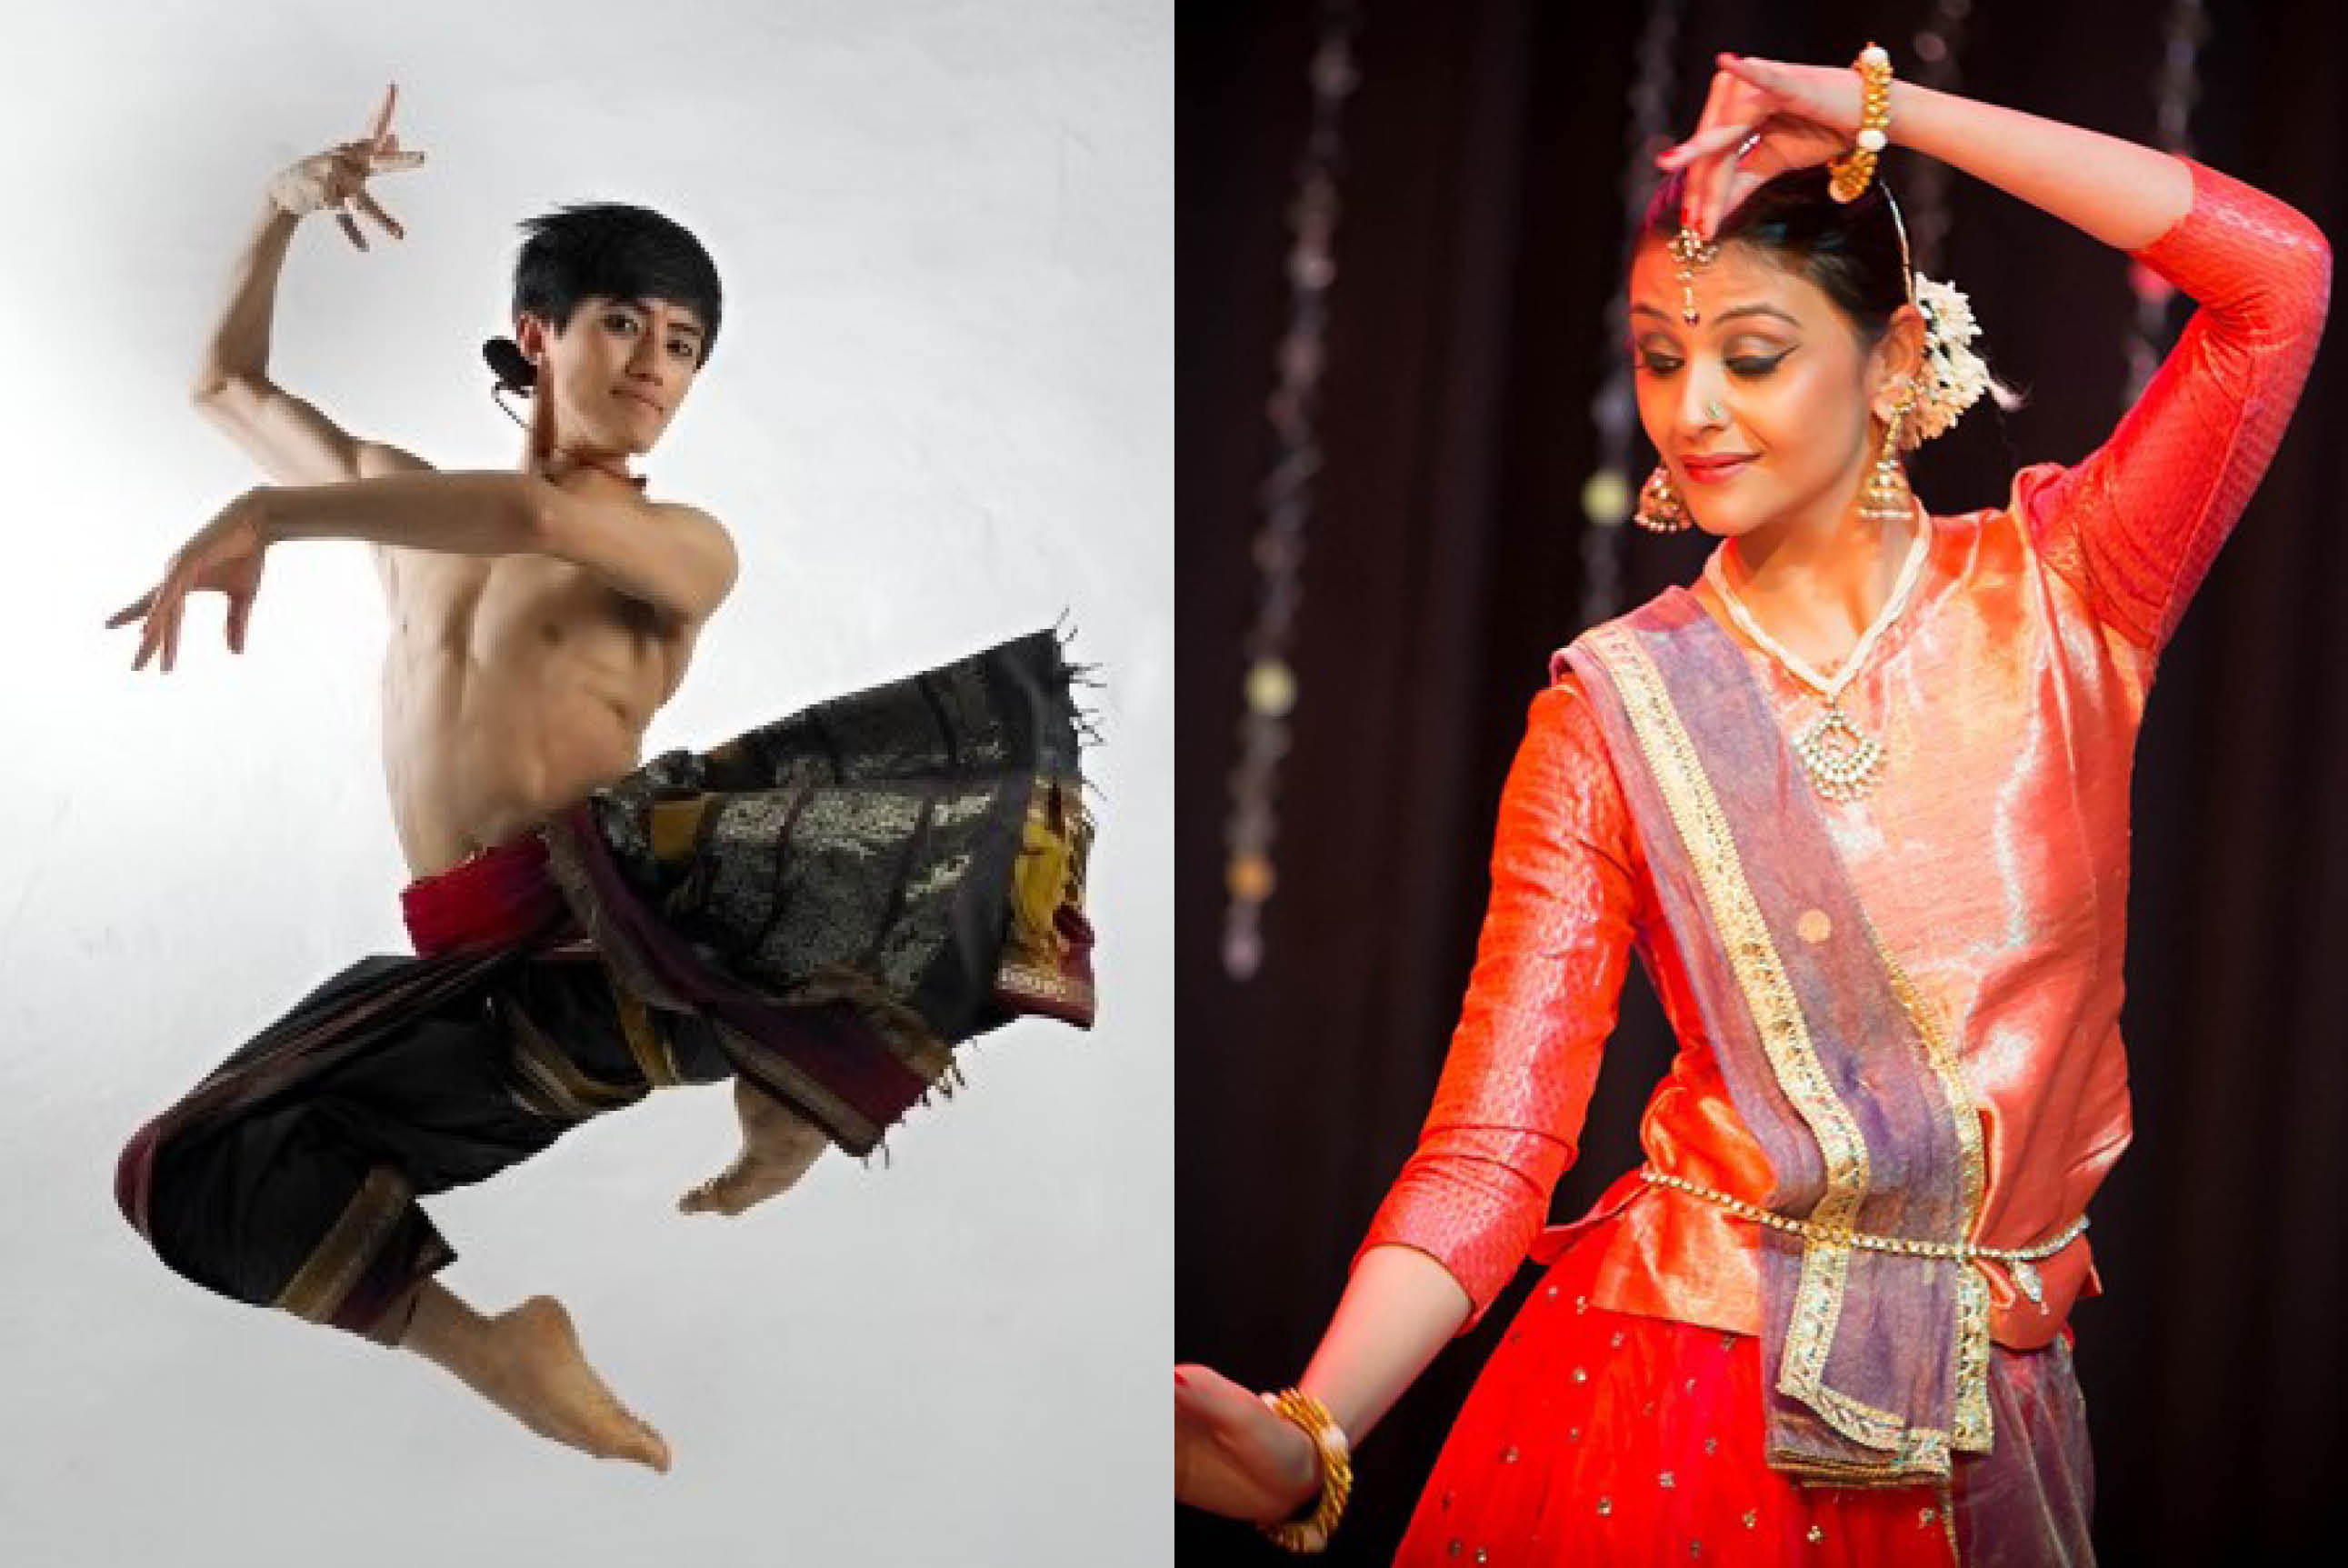 South Asian dancer